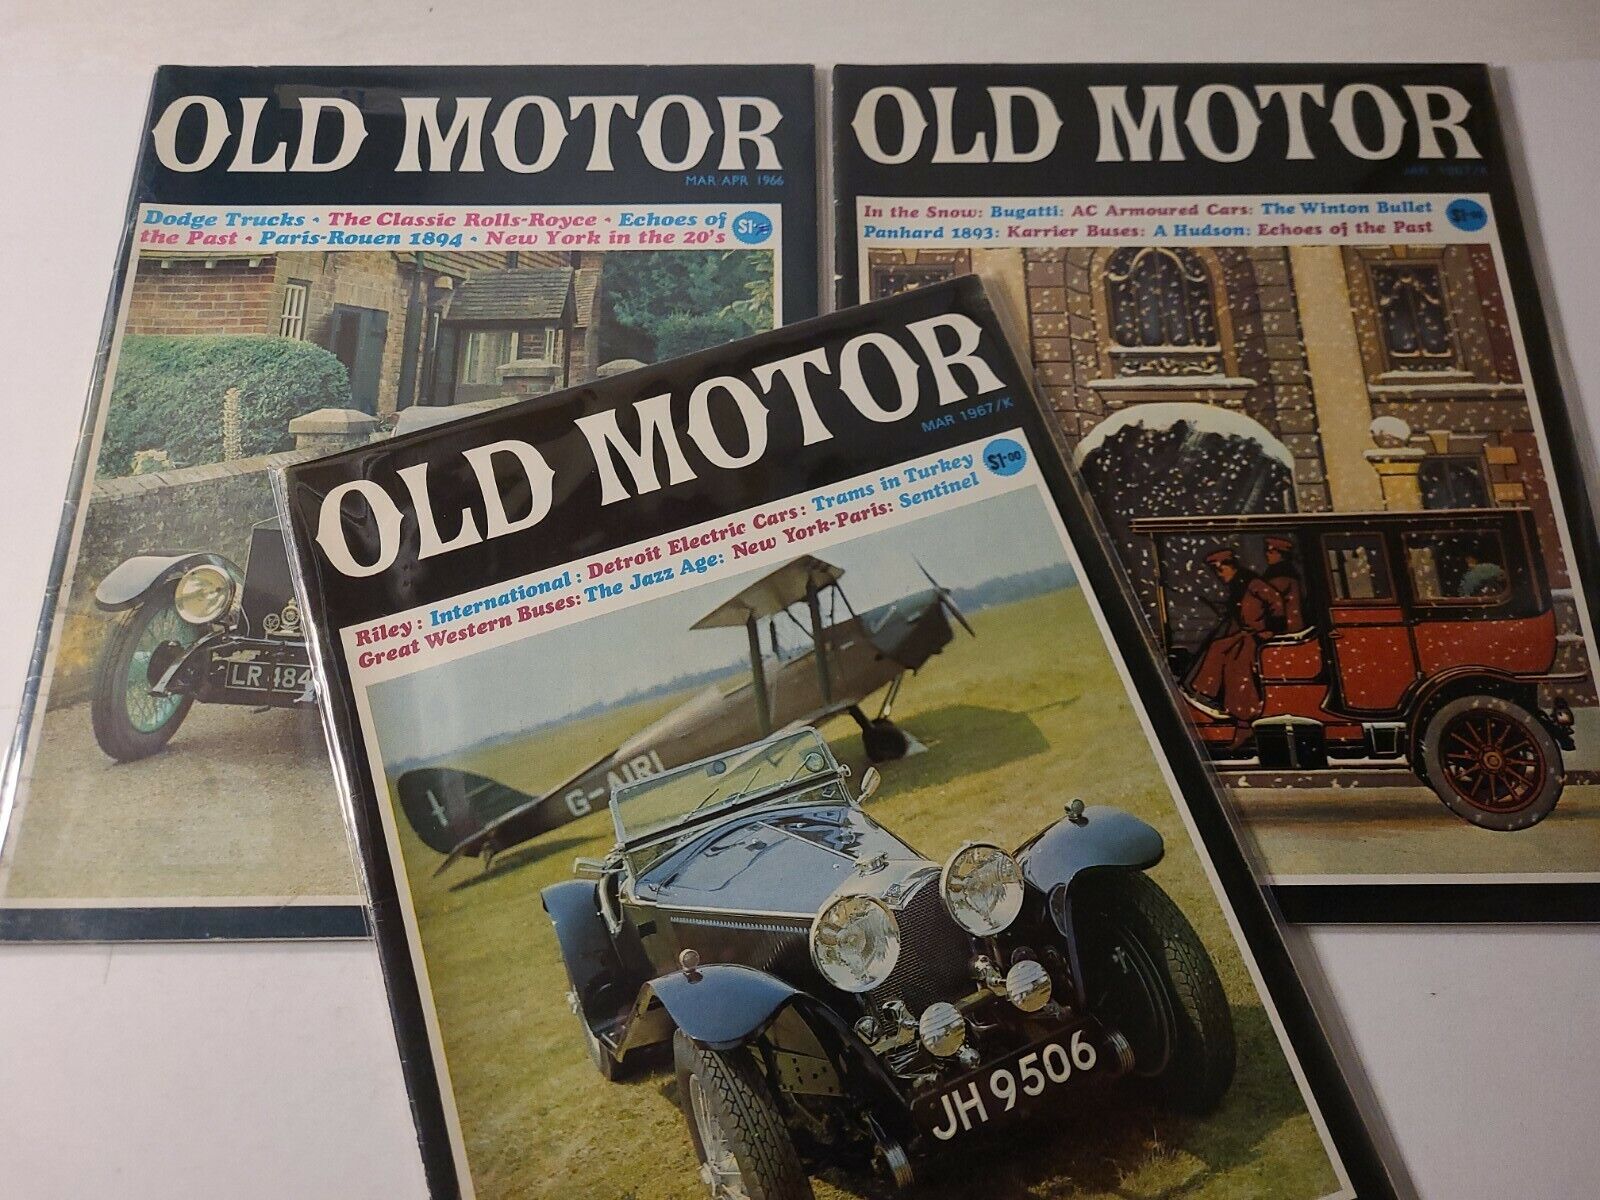 Lot of 3 1966 OLD MOTOR Magazines - Dodge Trucks, Bugatti, Winton, Electric Cars